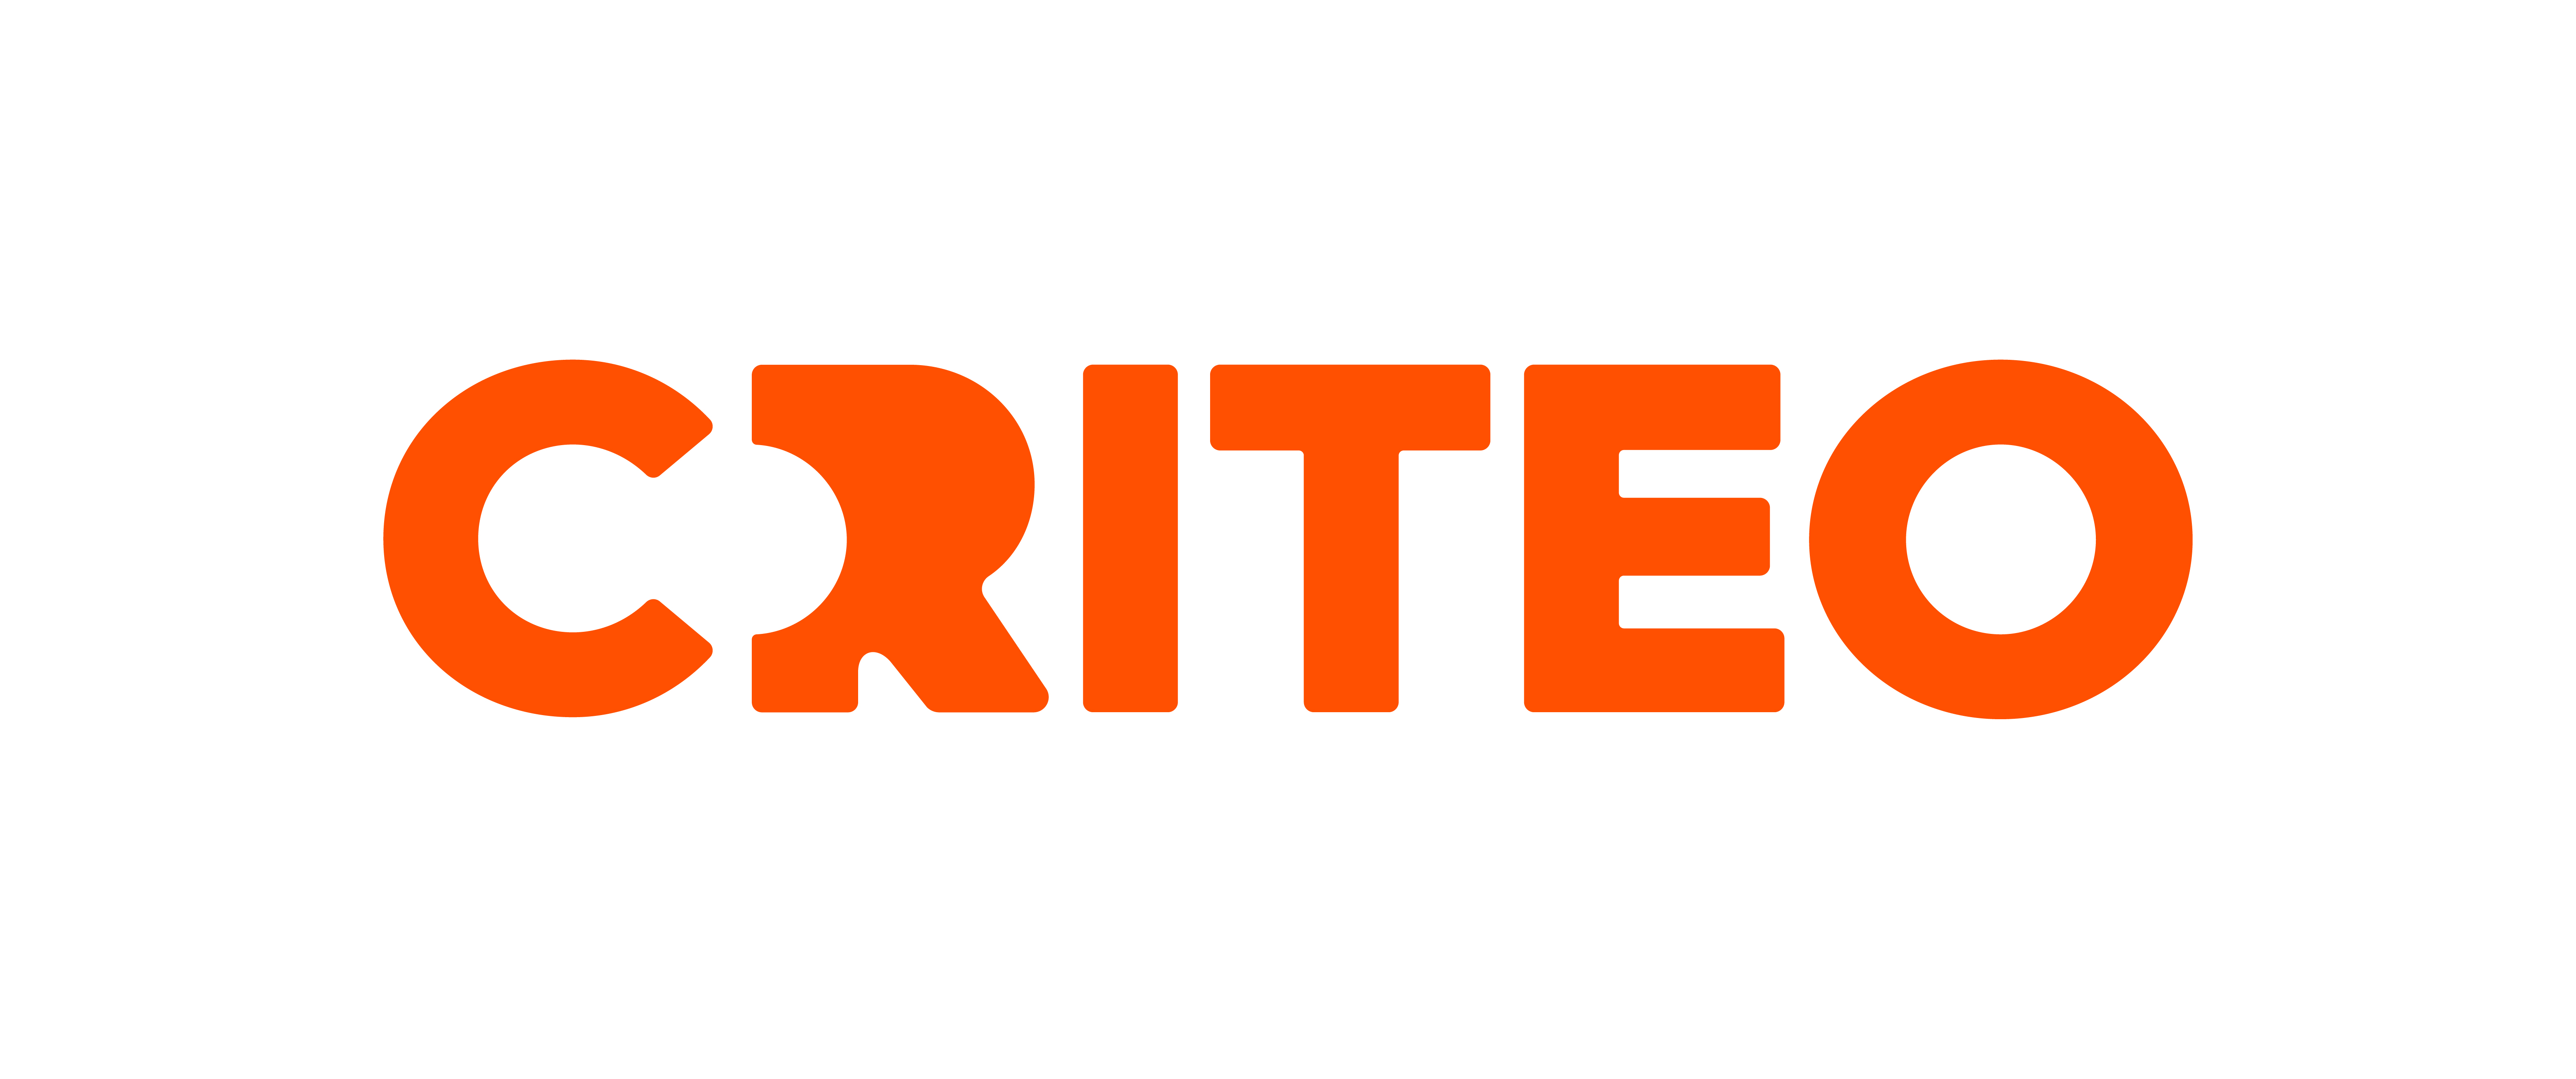 Criteo-Logo-Orange-300 (2).jpg